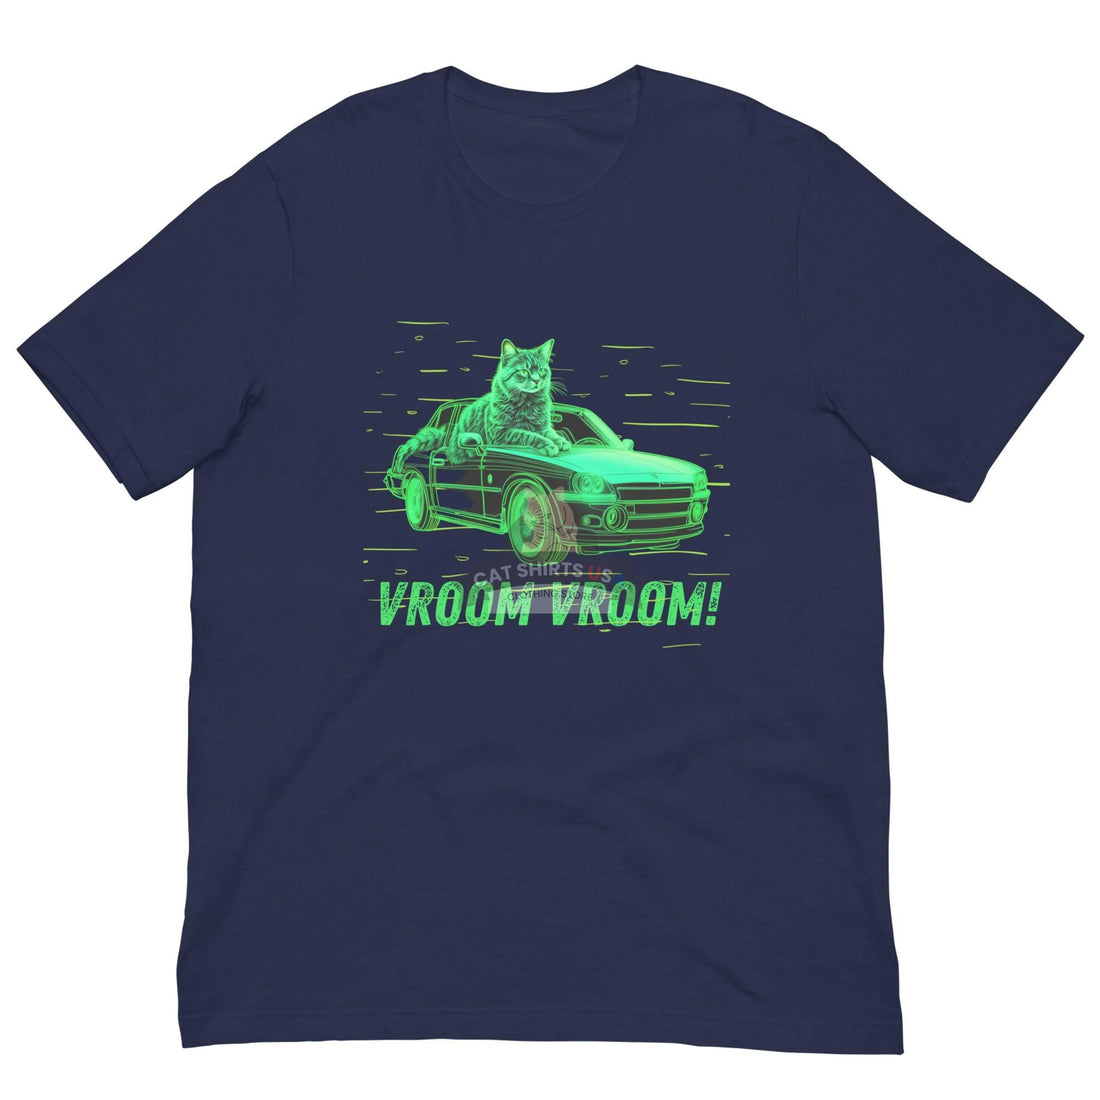 Vroom Vroom! Cat Shirt - Cat Shirts USA